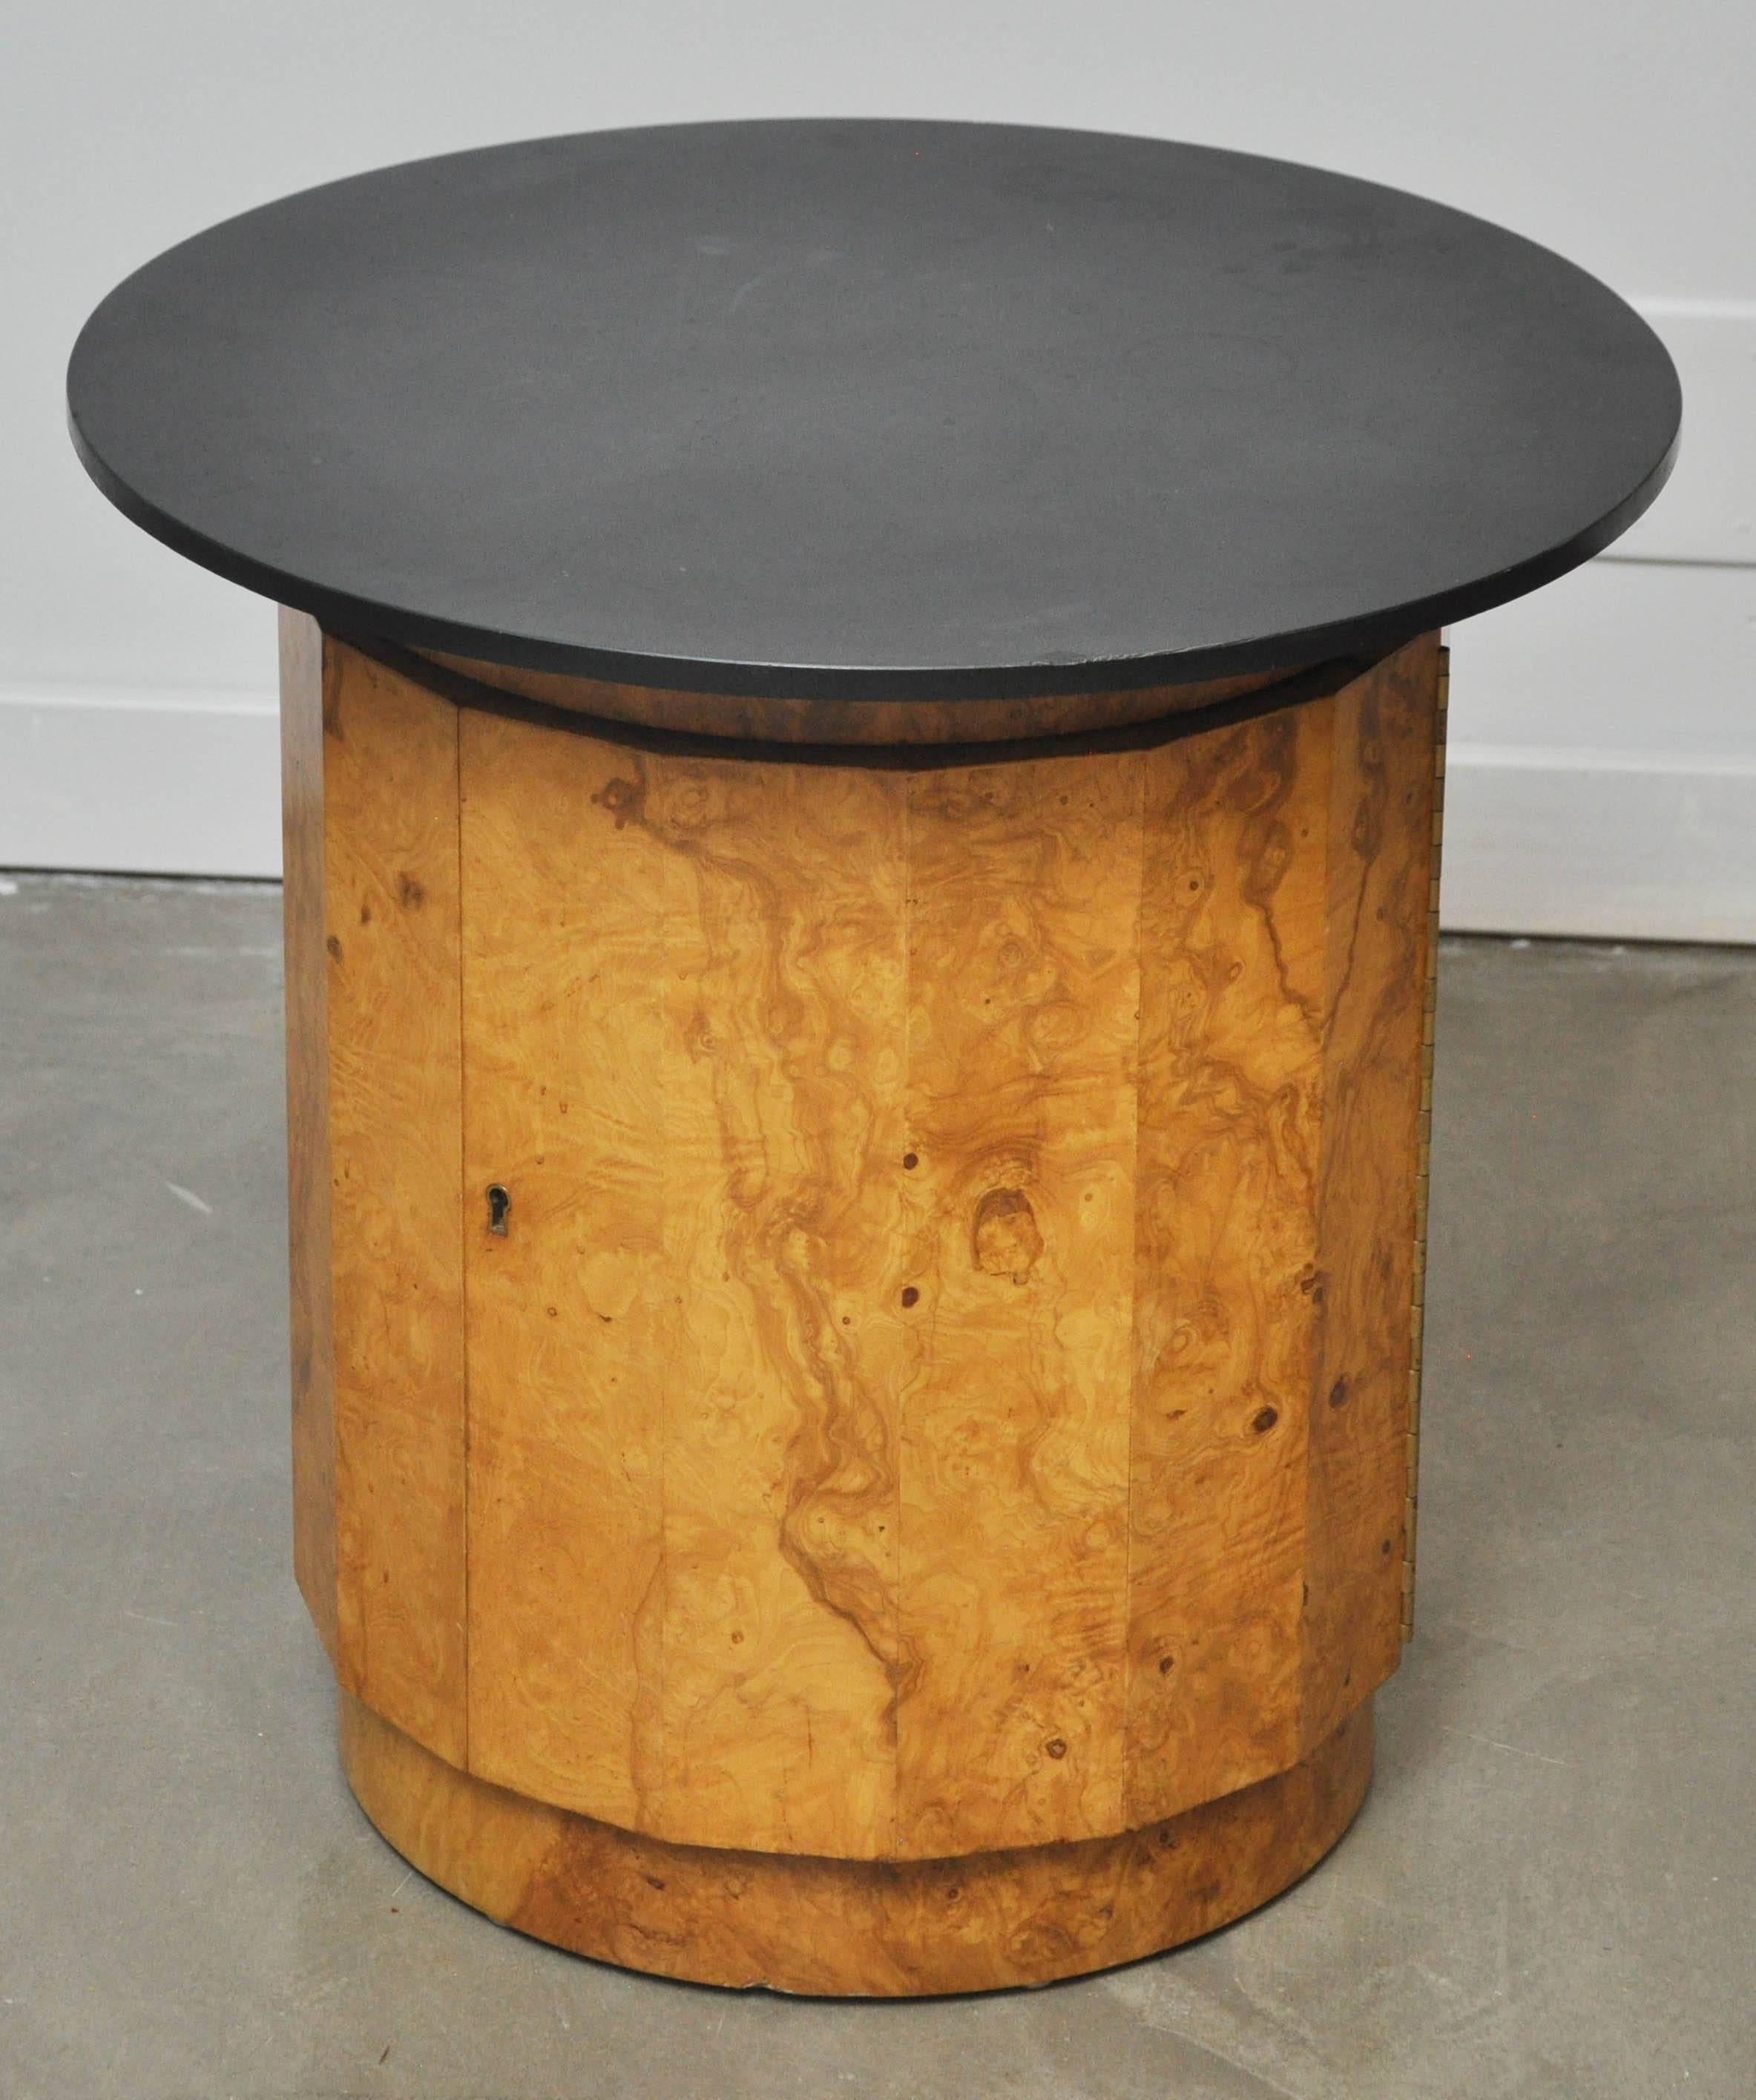 Burl wood locking storage end table by Edward Wormley with original slate top.